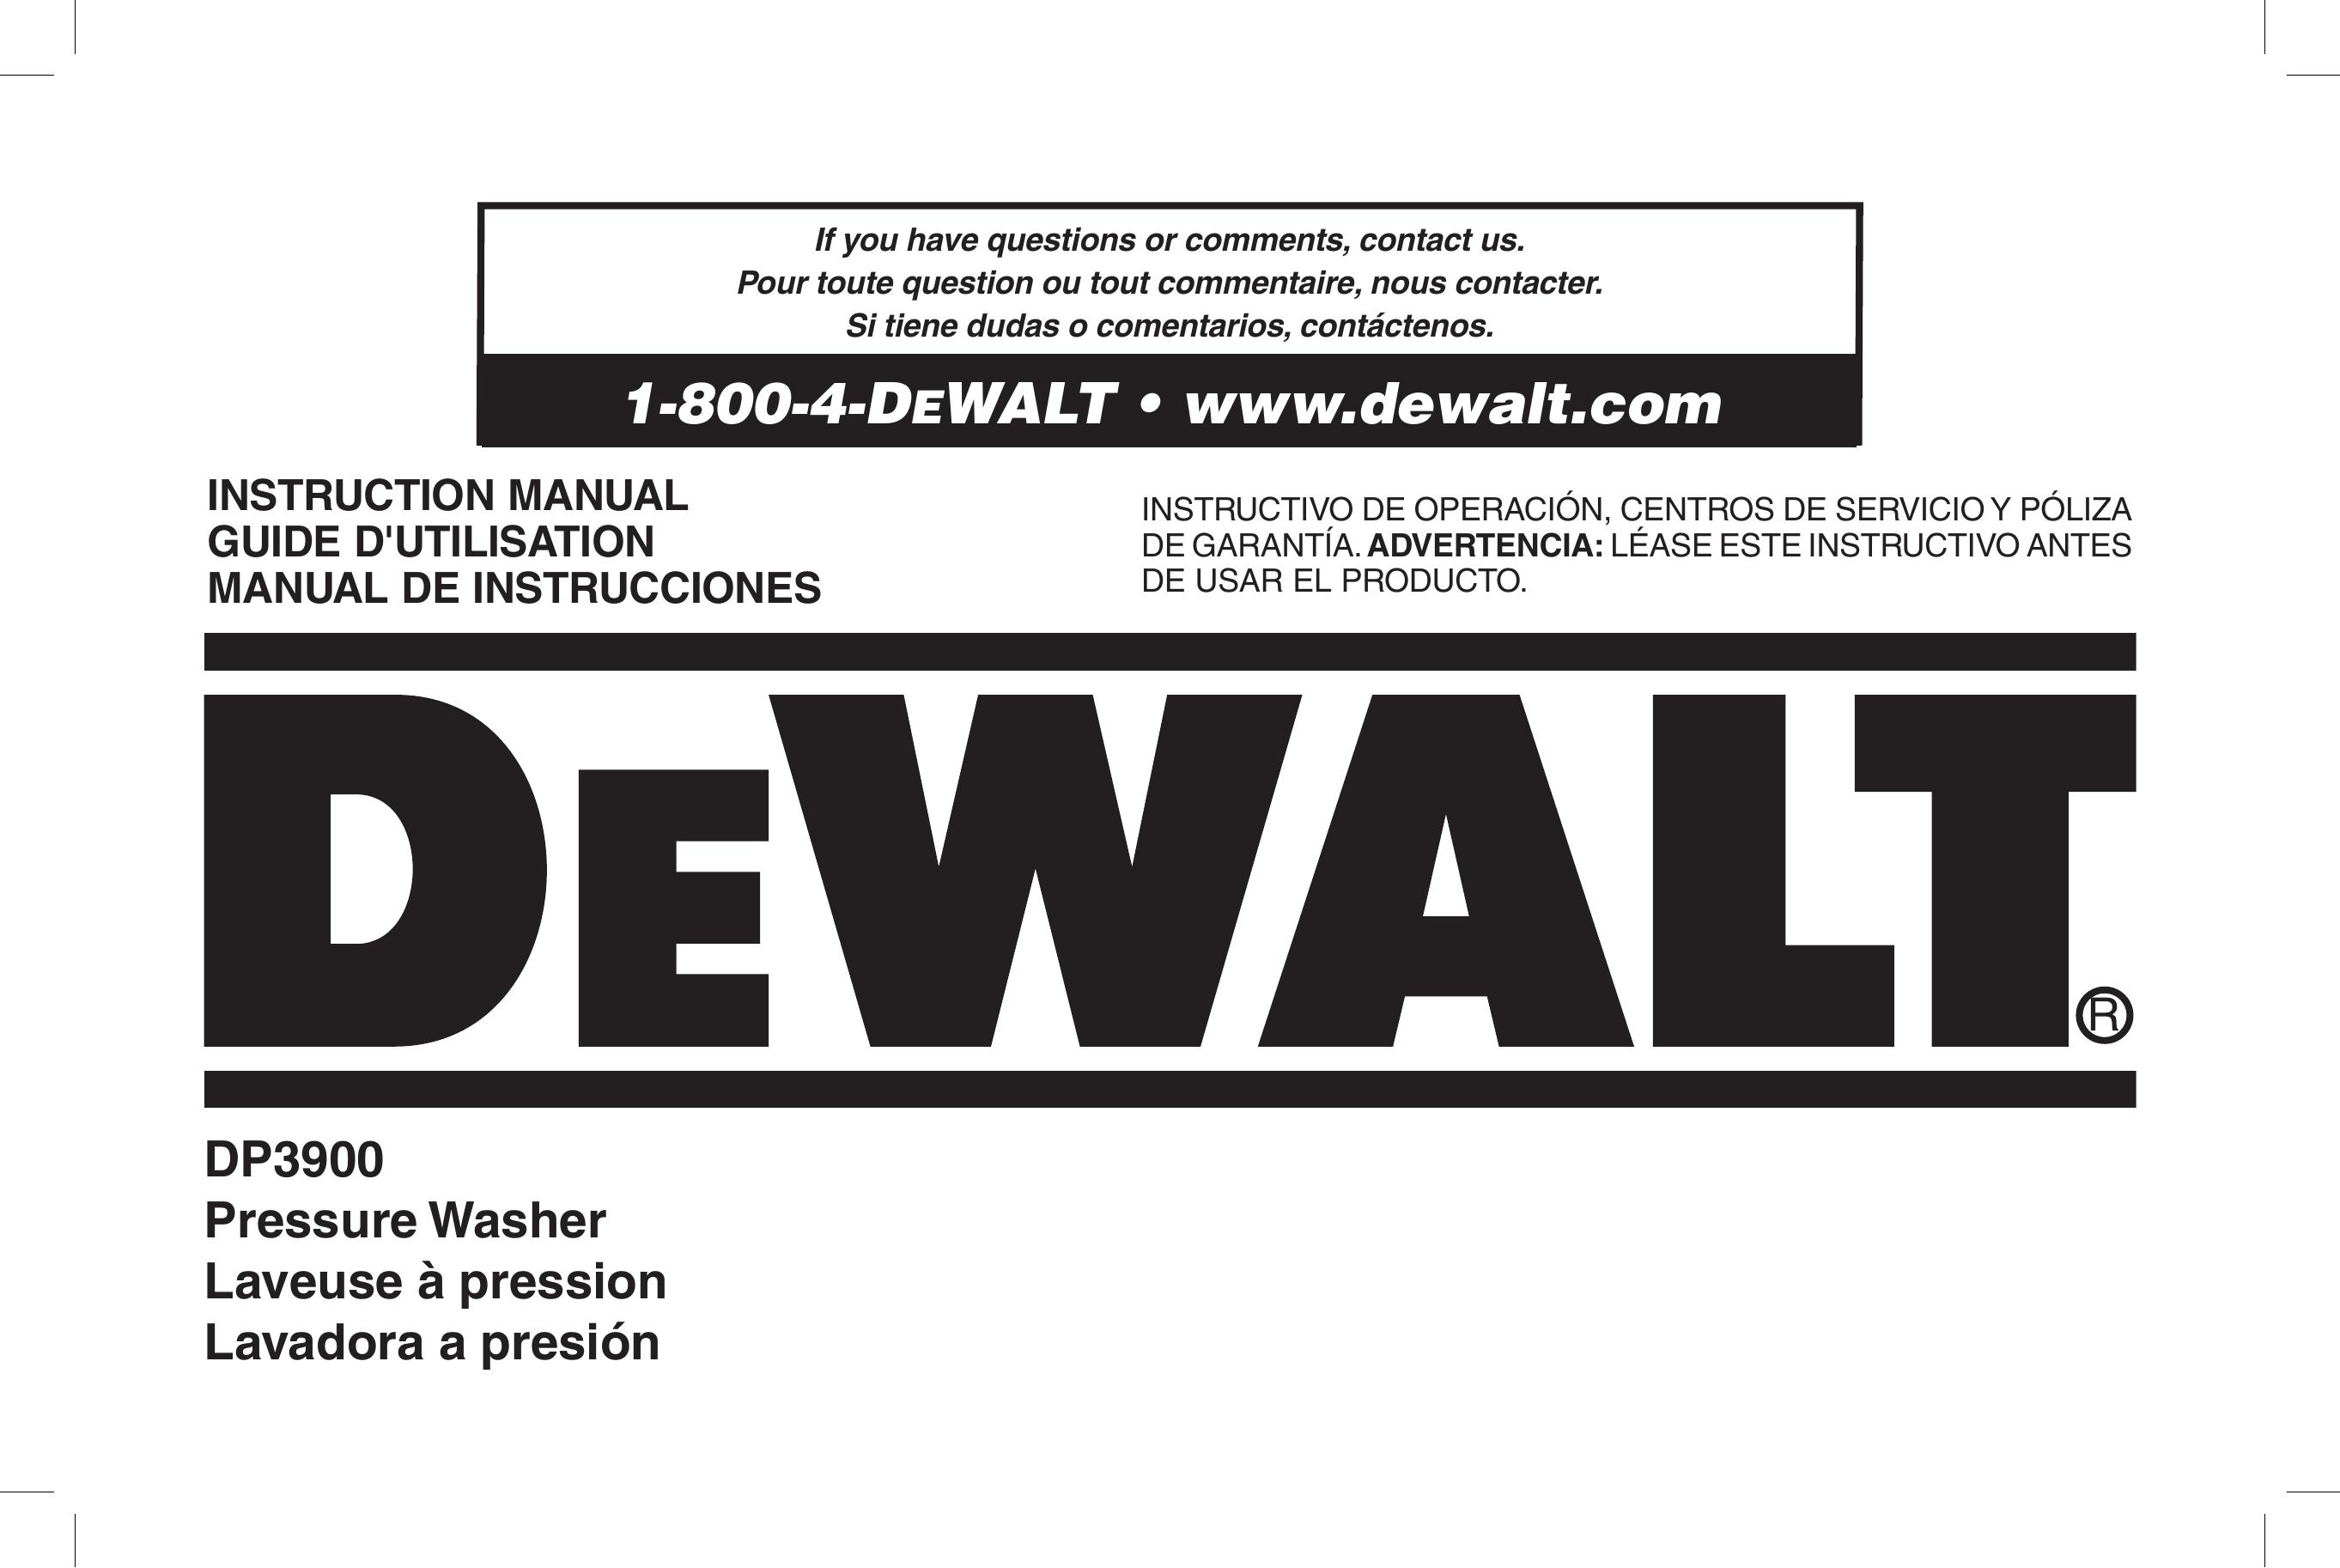 DeWalt A20832 Pressure Washer User Manual